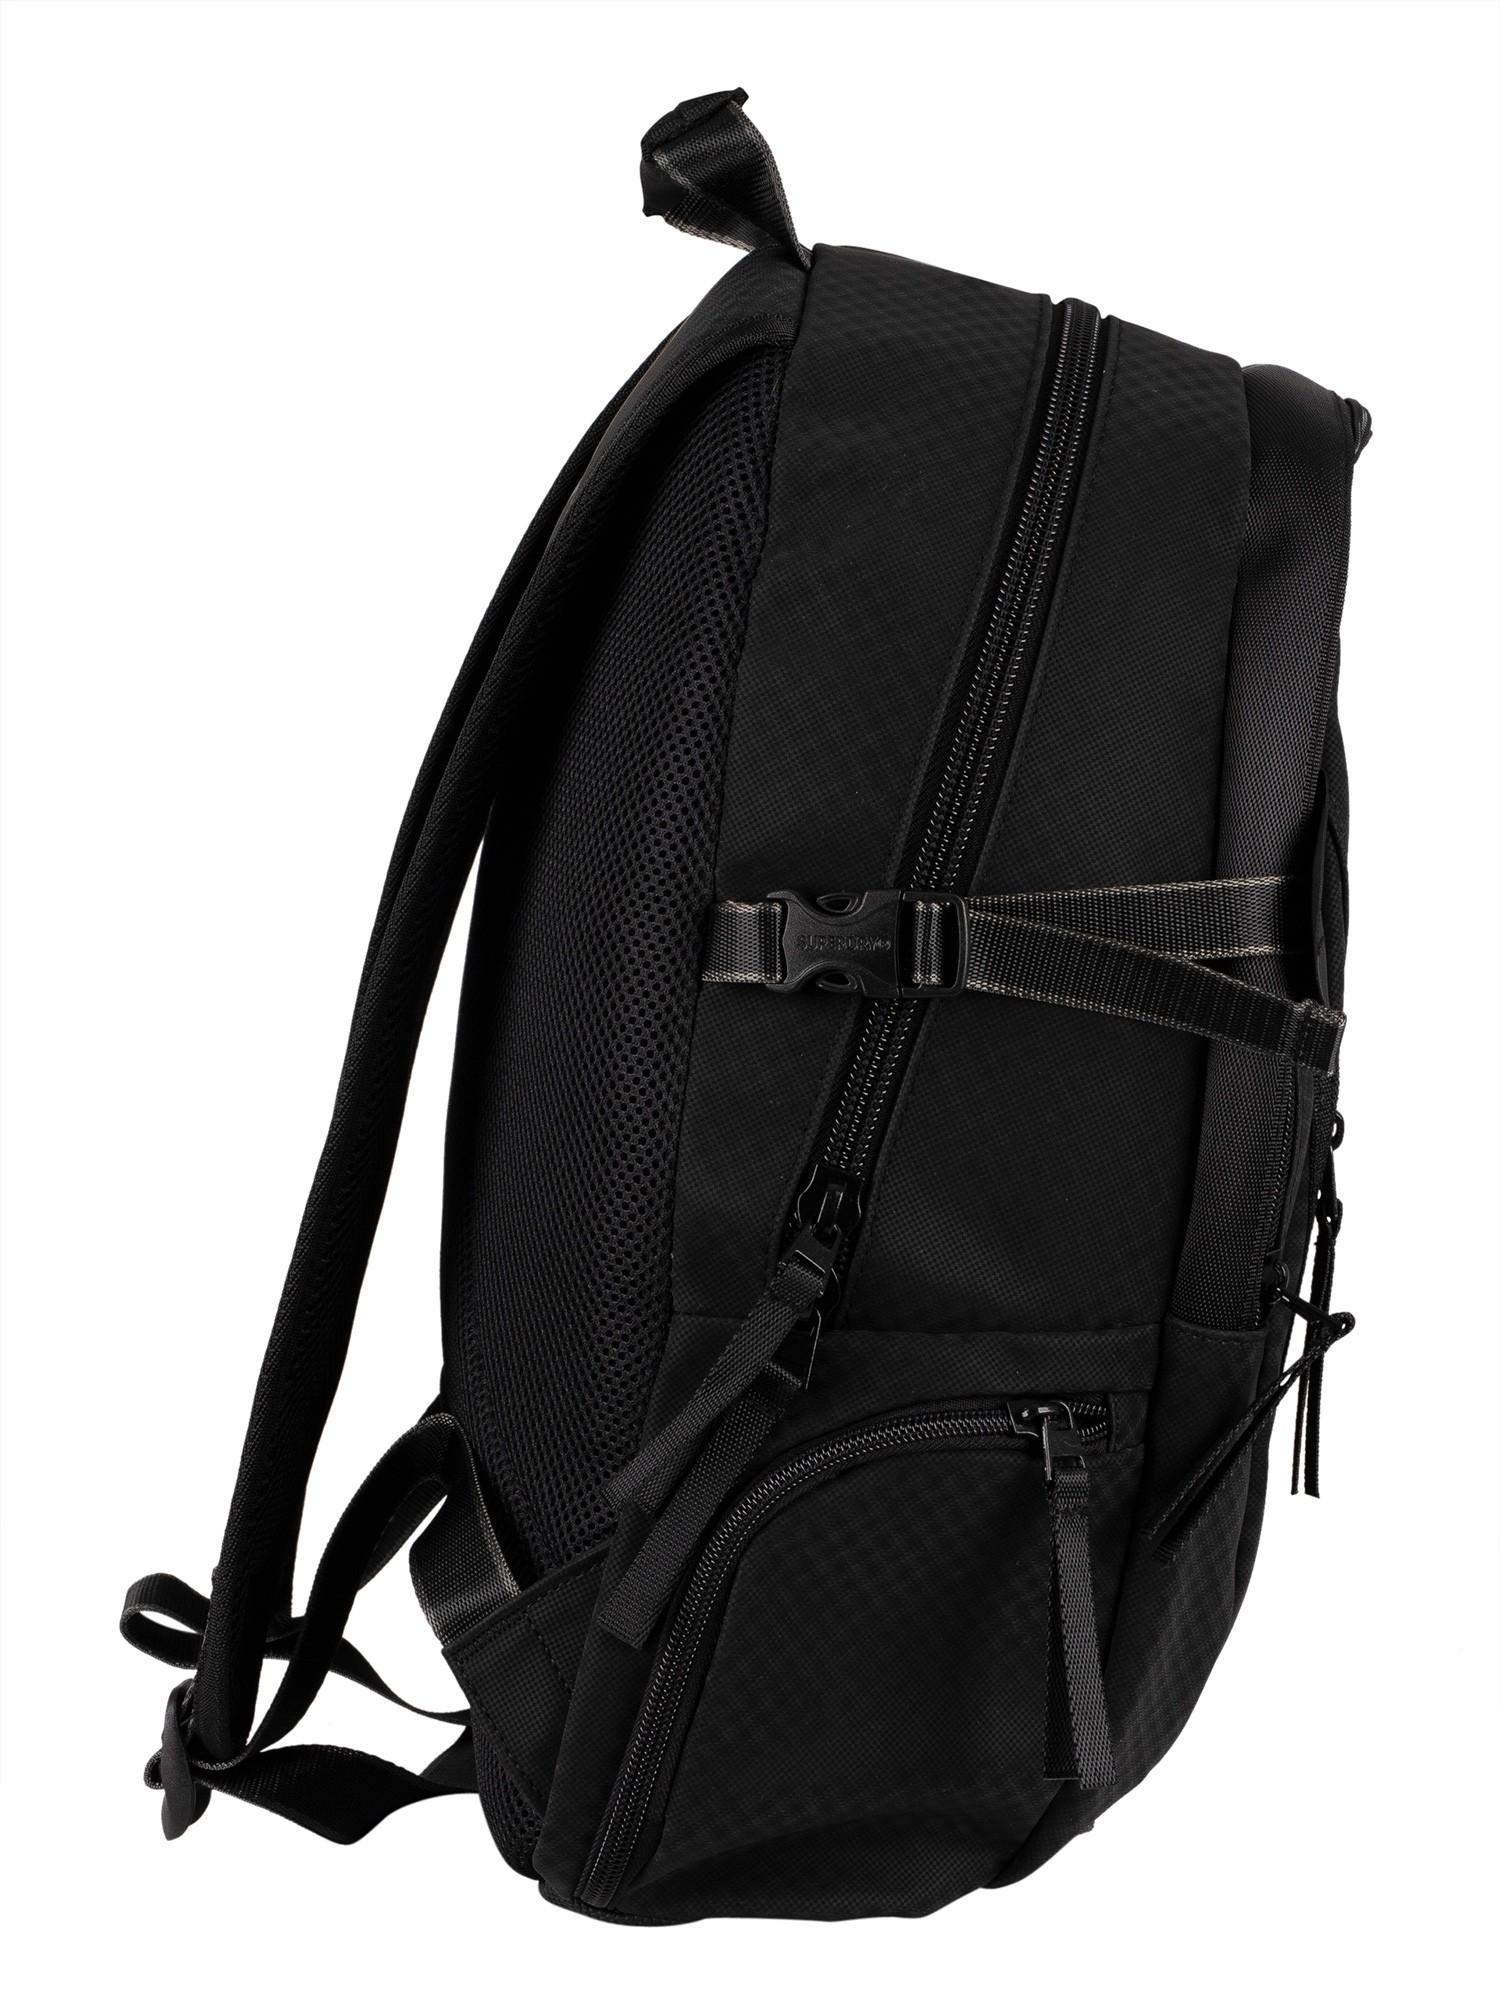 Superdry Combray Tarp Backpack in Black for Men - Lyst